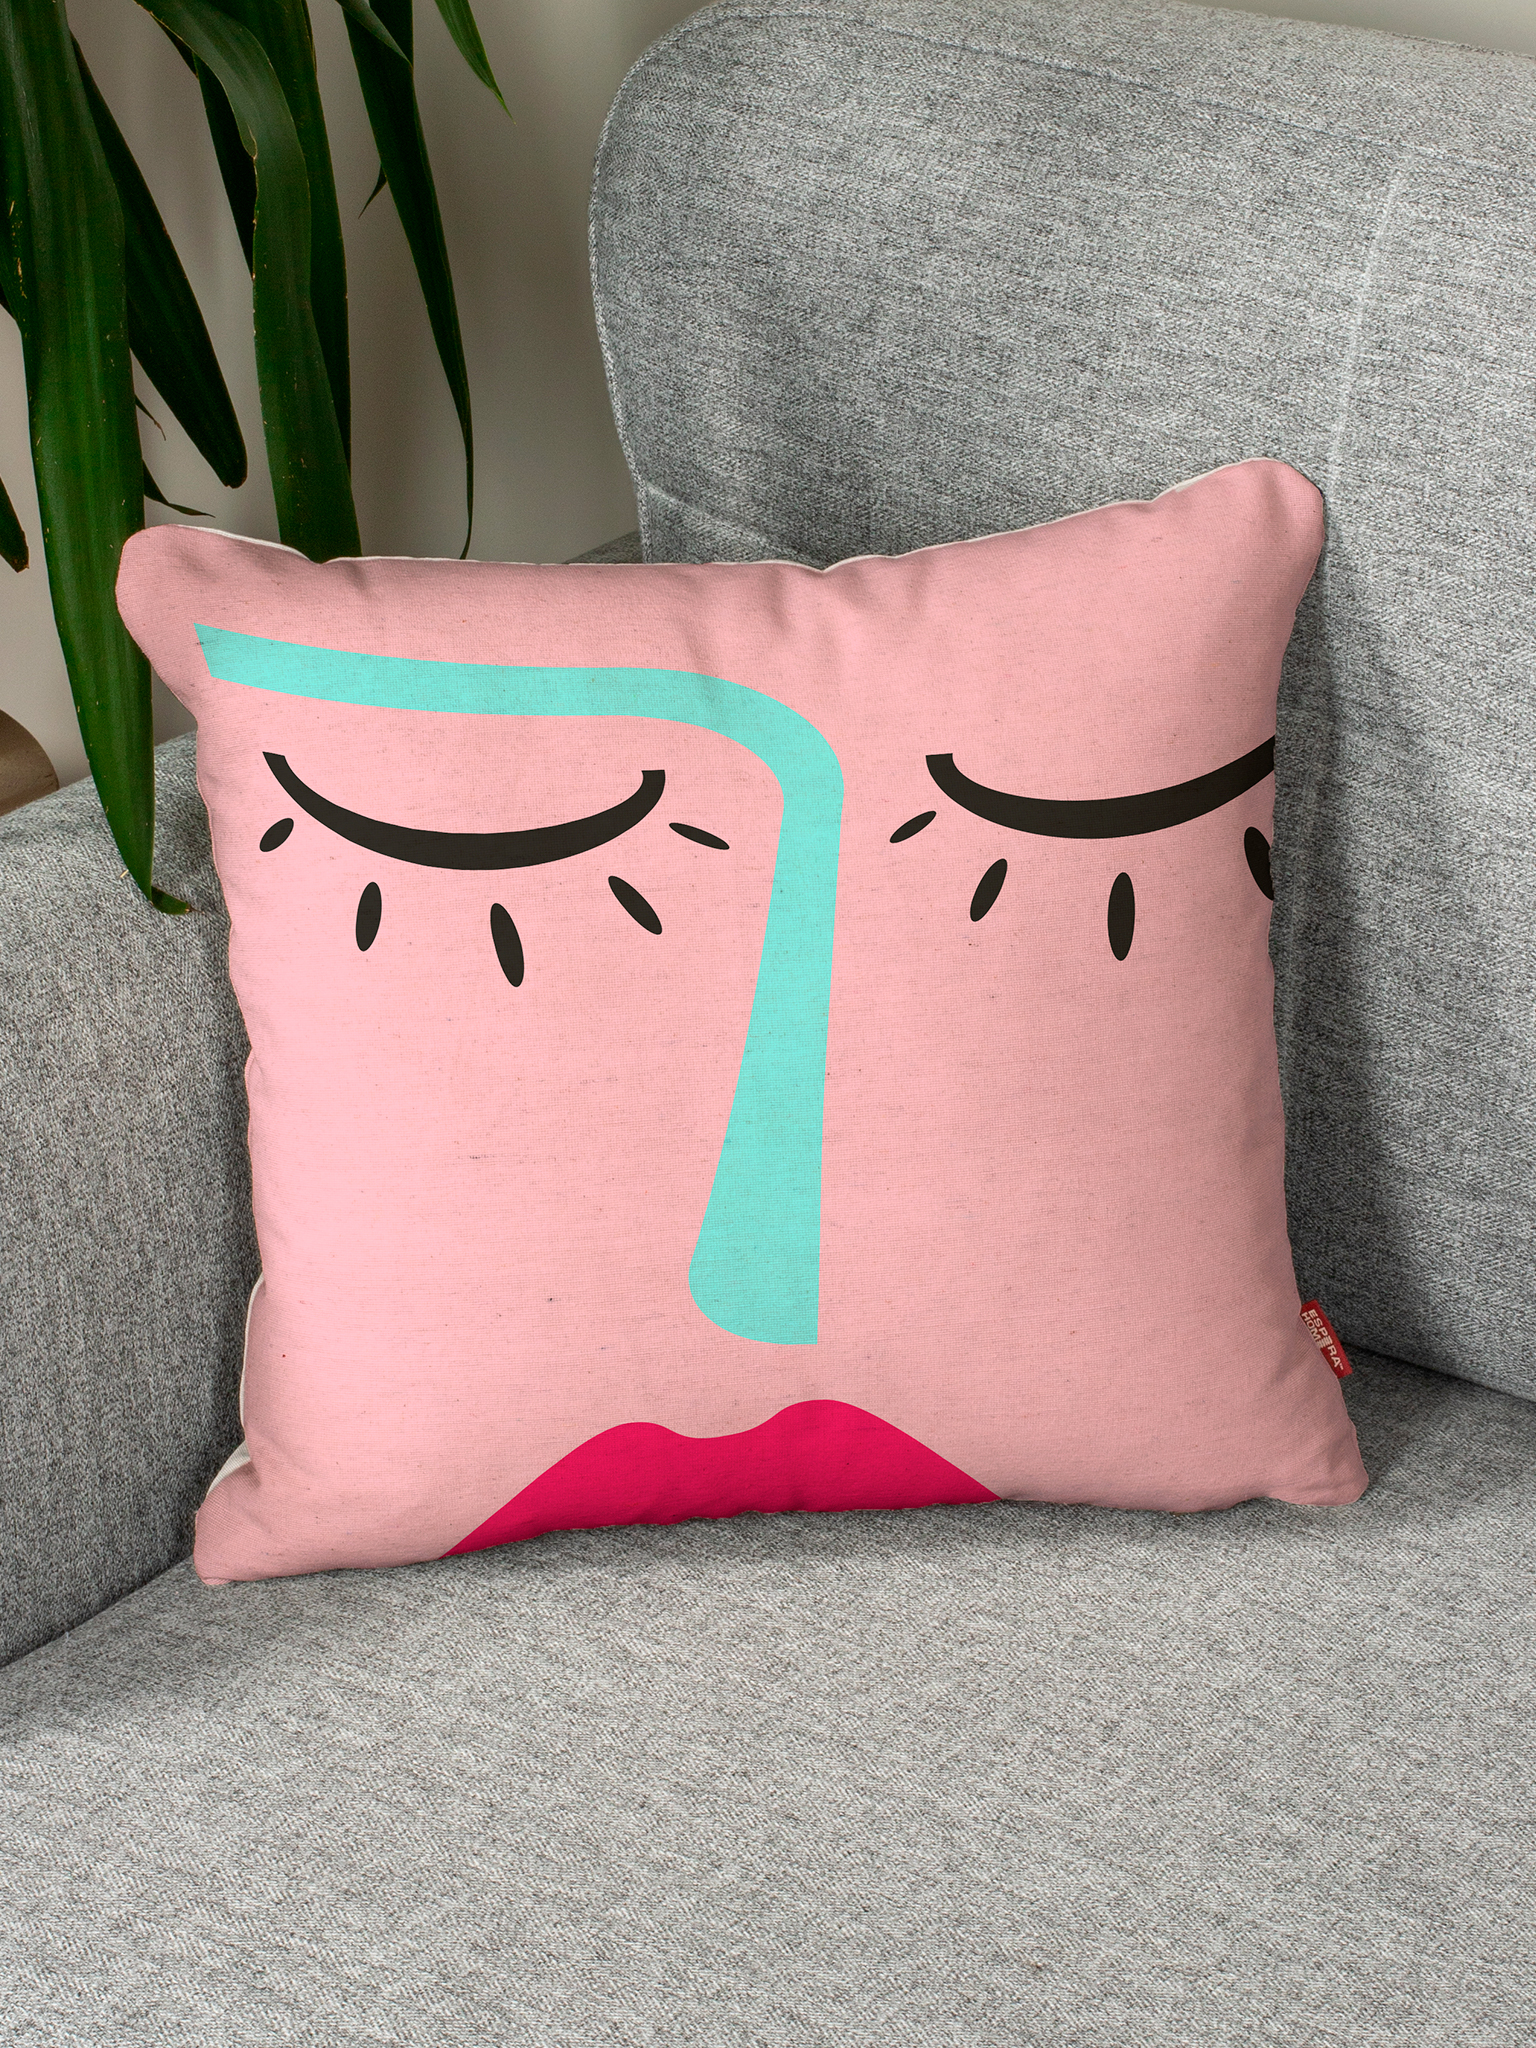 Декоративная подушка на диван • Deco / Деко •  Лицо розовое 45 х 45 см